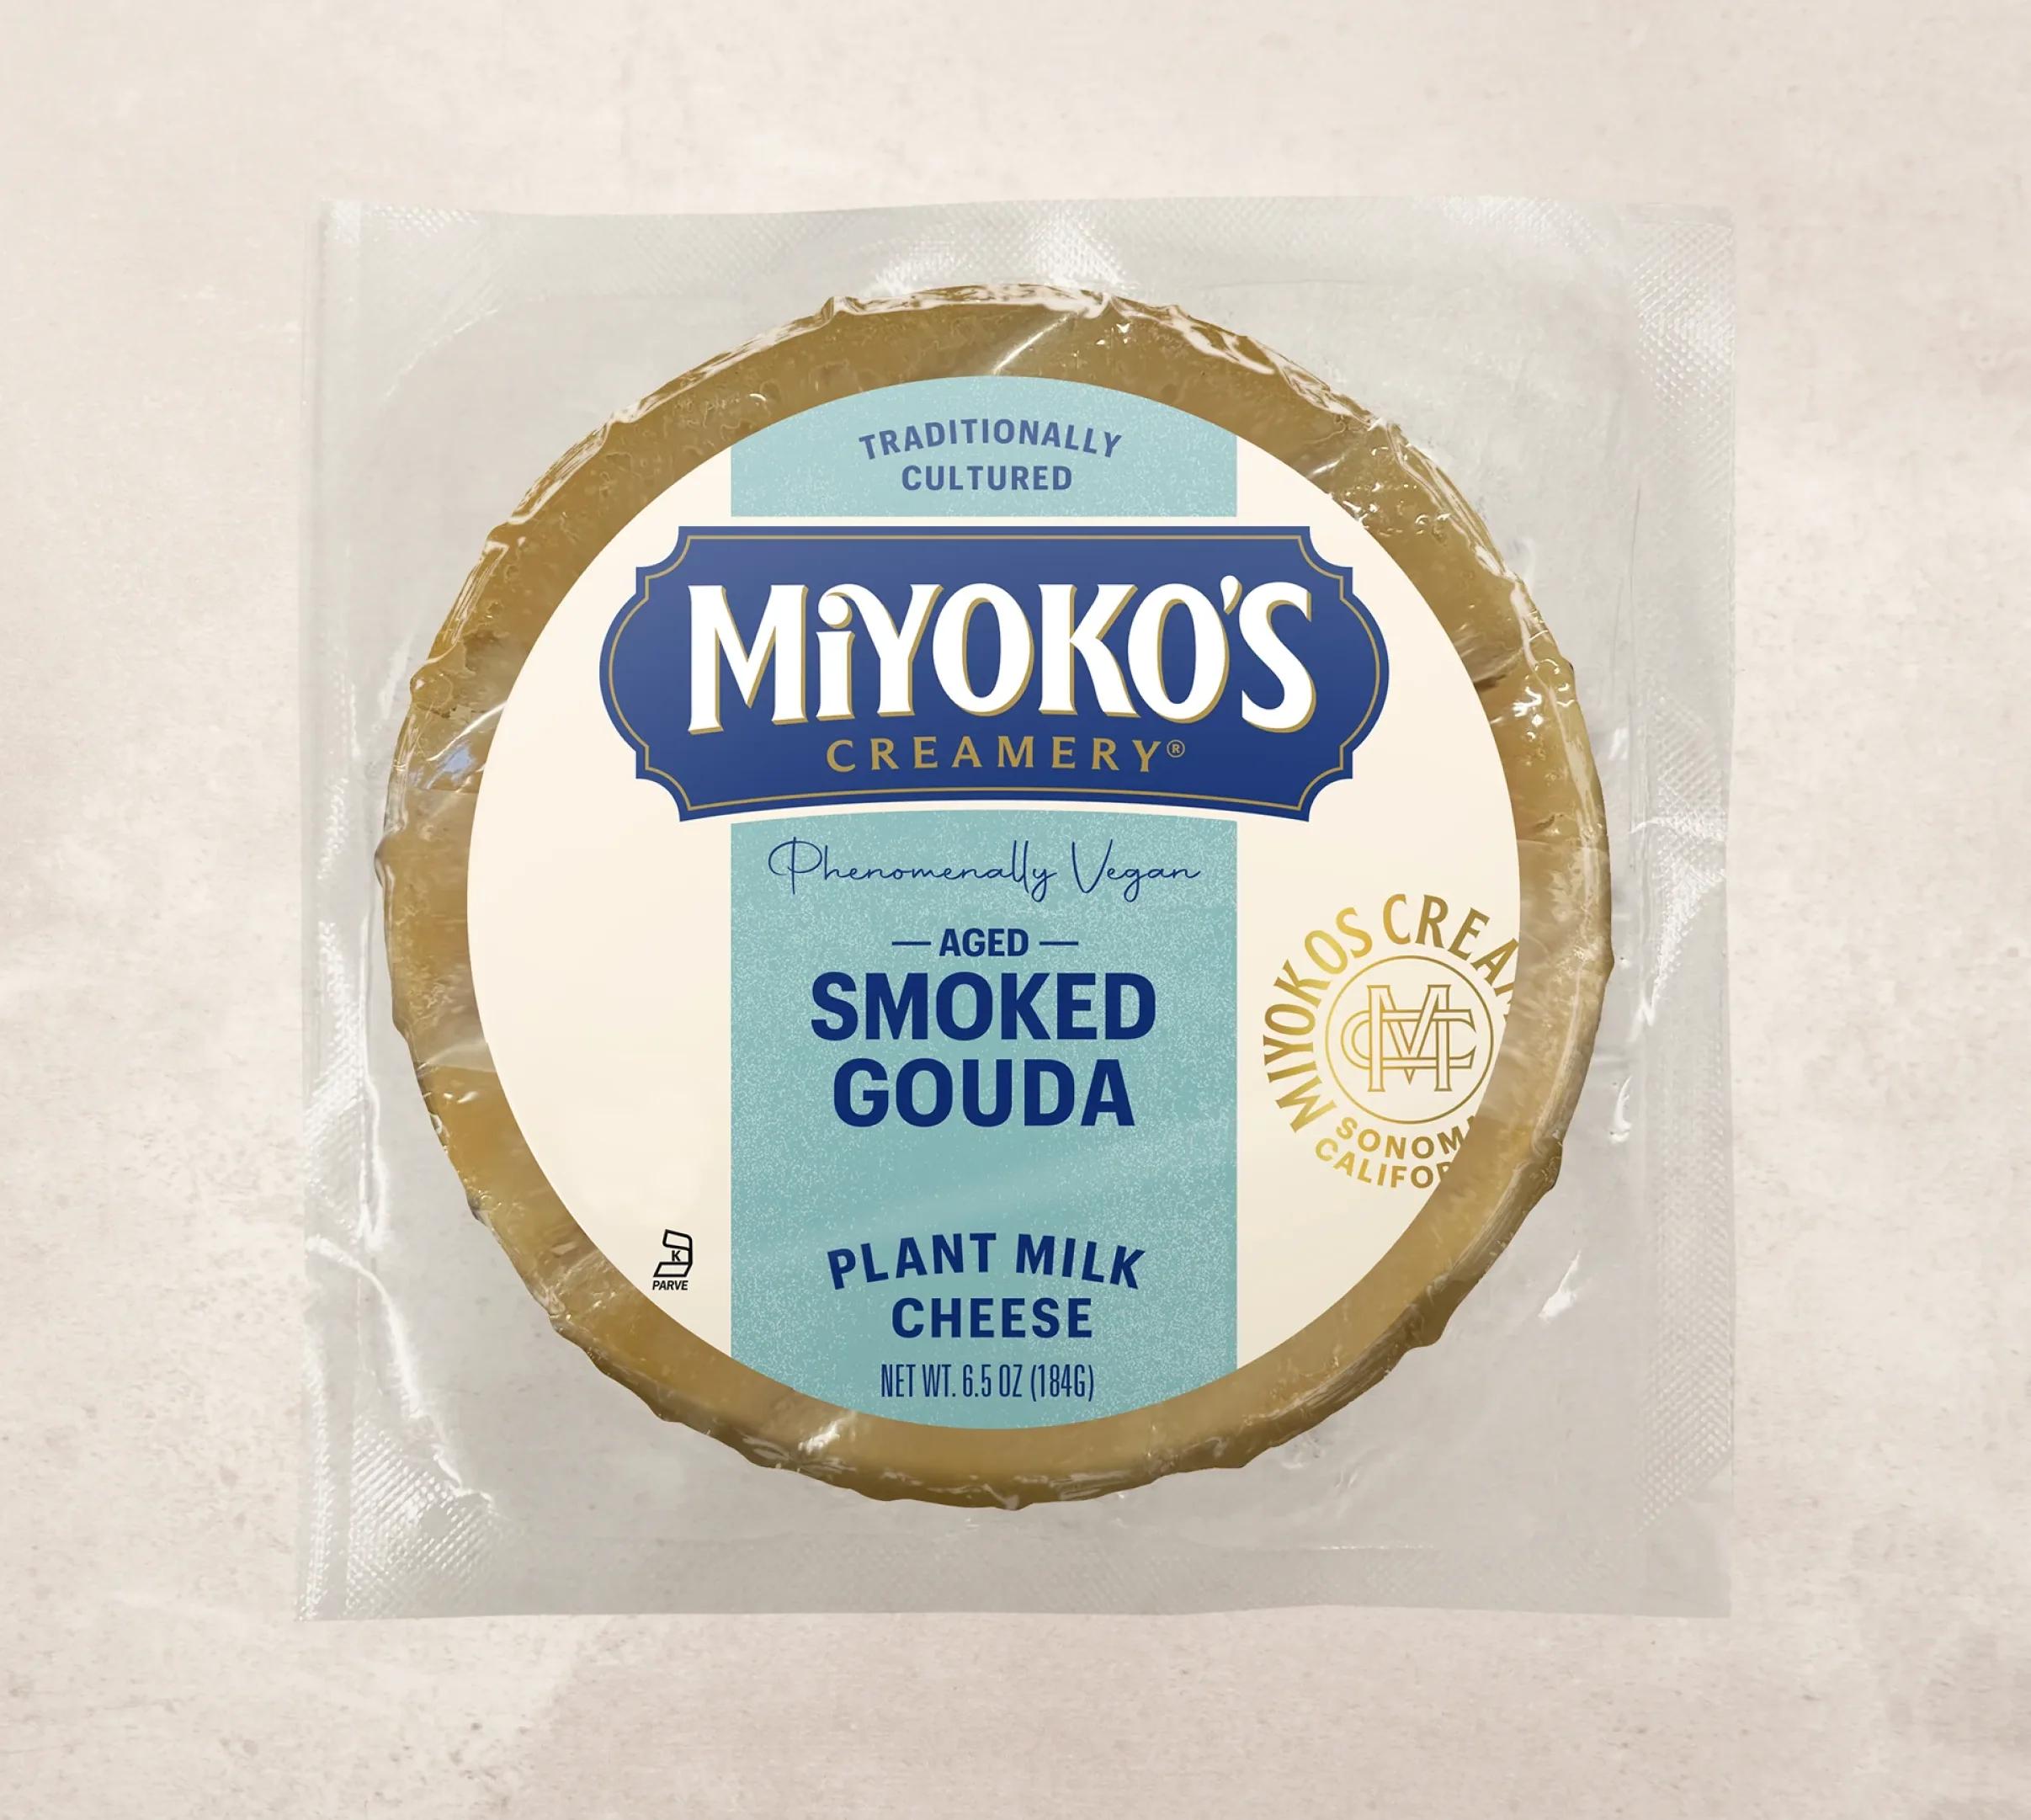 smoked gouda vegetarian - Does Gouda use rennet